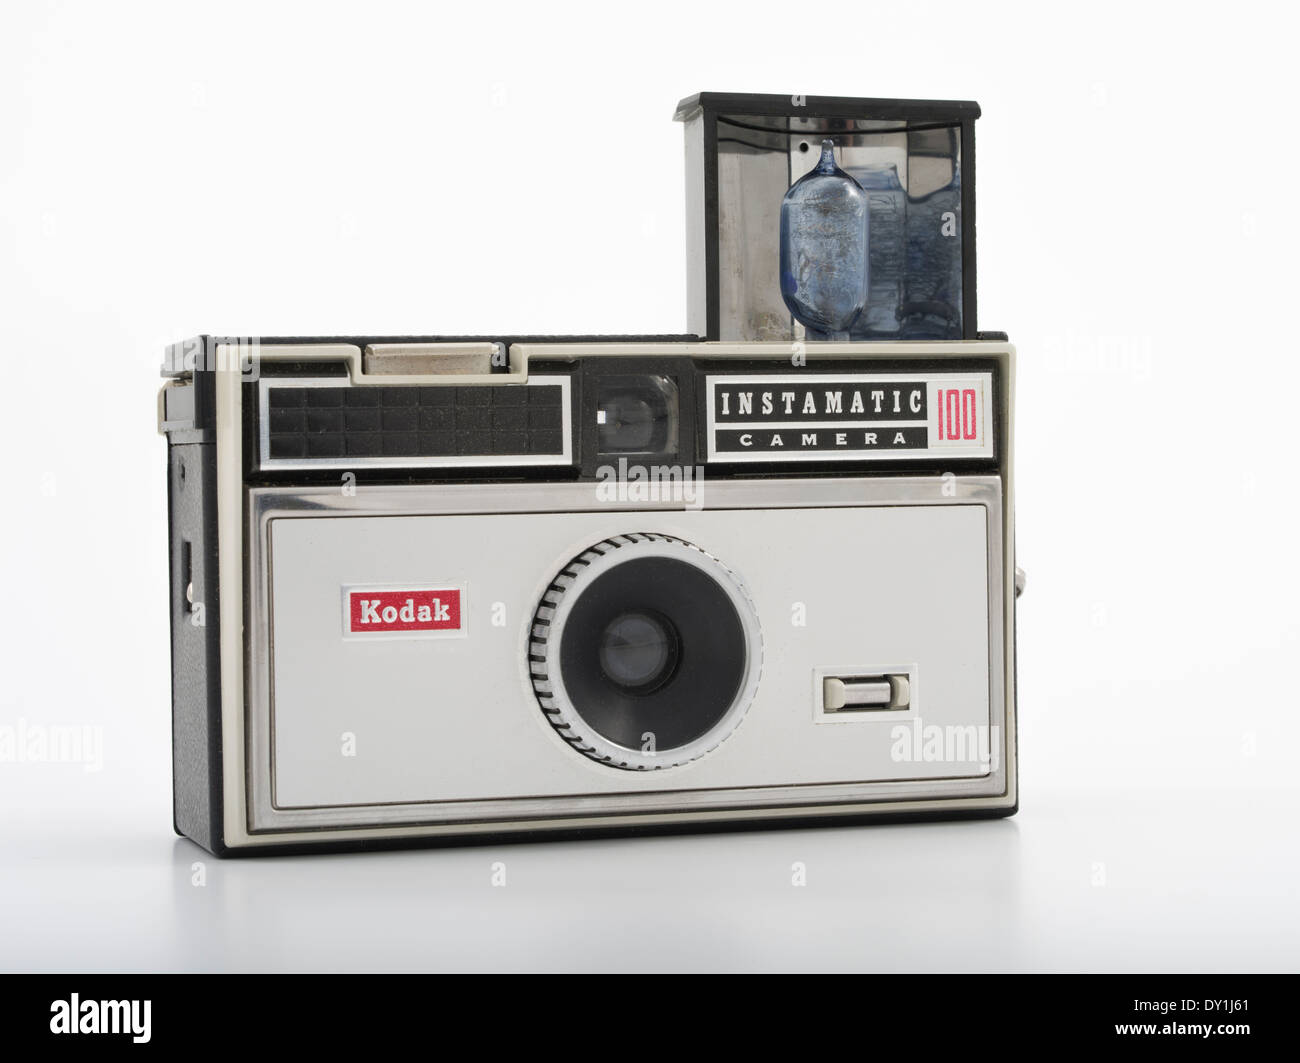 Kodak Instamatic 100 Film-Kamera mit Blitz, der 126 Format Film verwendet. Kodak-1963. Stockfoto